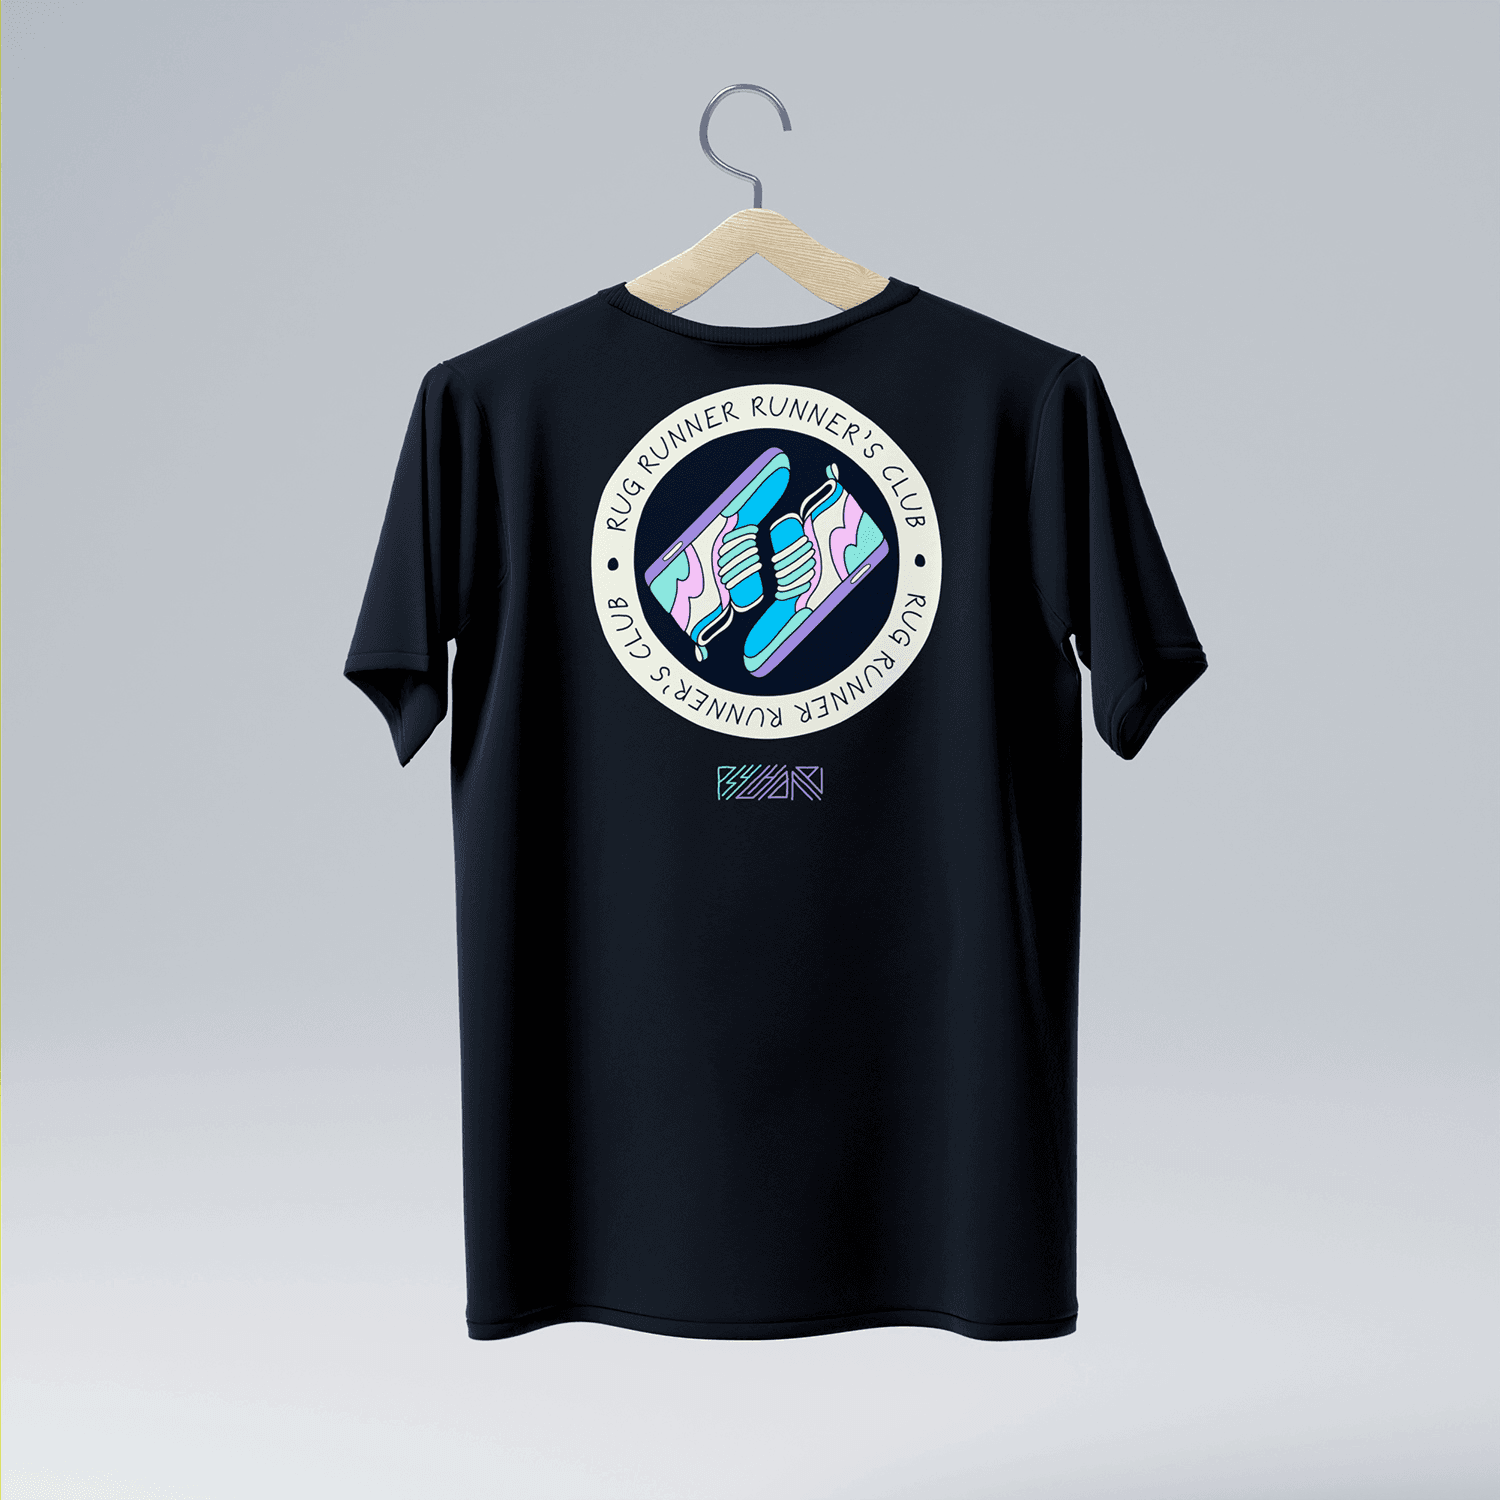 PSYCHRØMΞ Limited-Edition Rug Runner T-Shirt #17